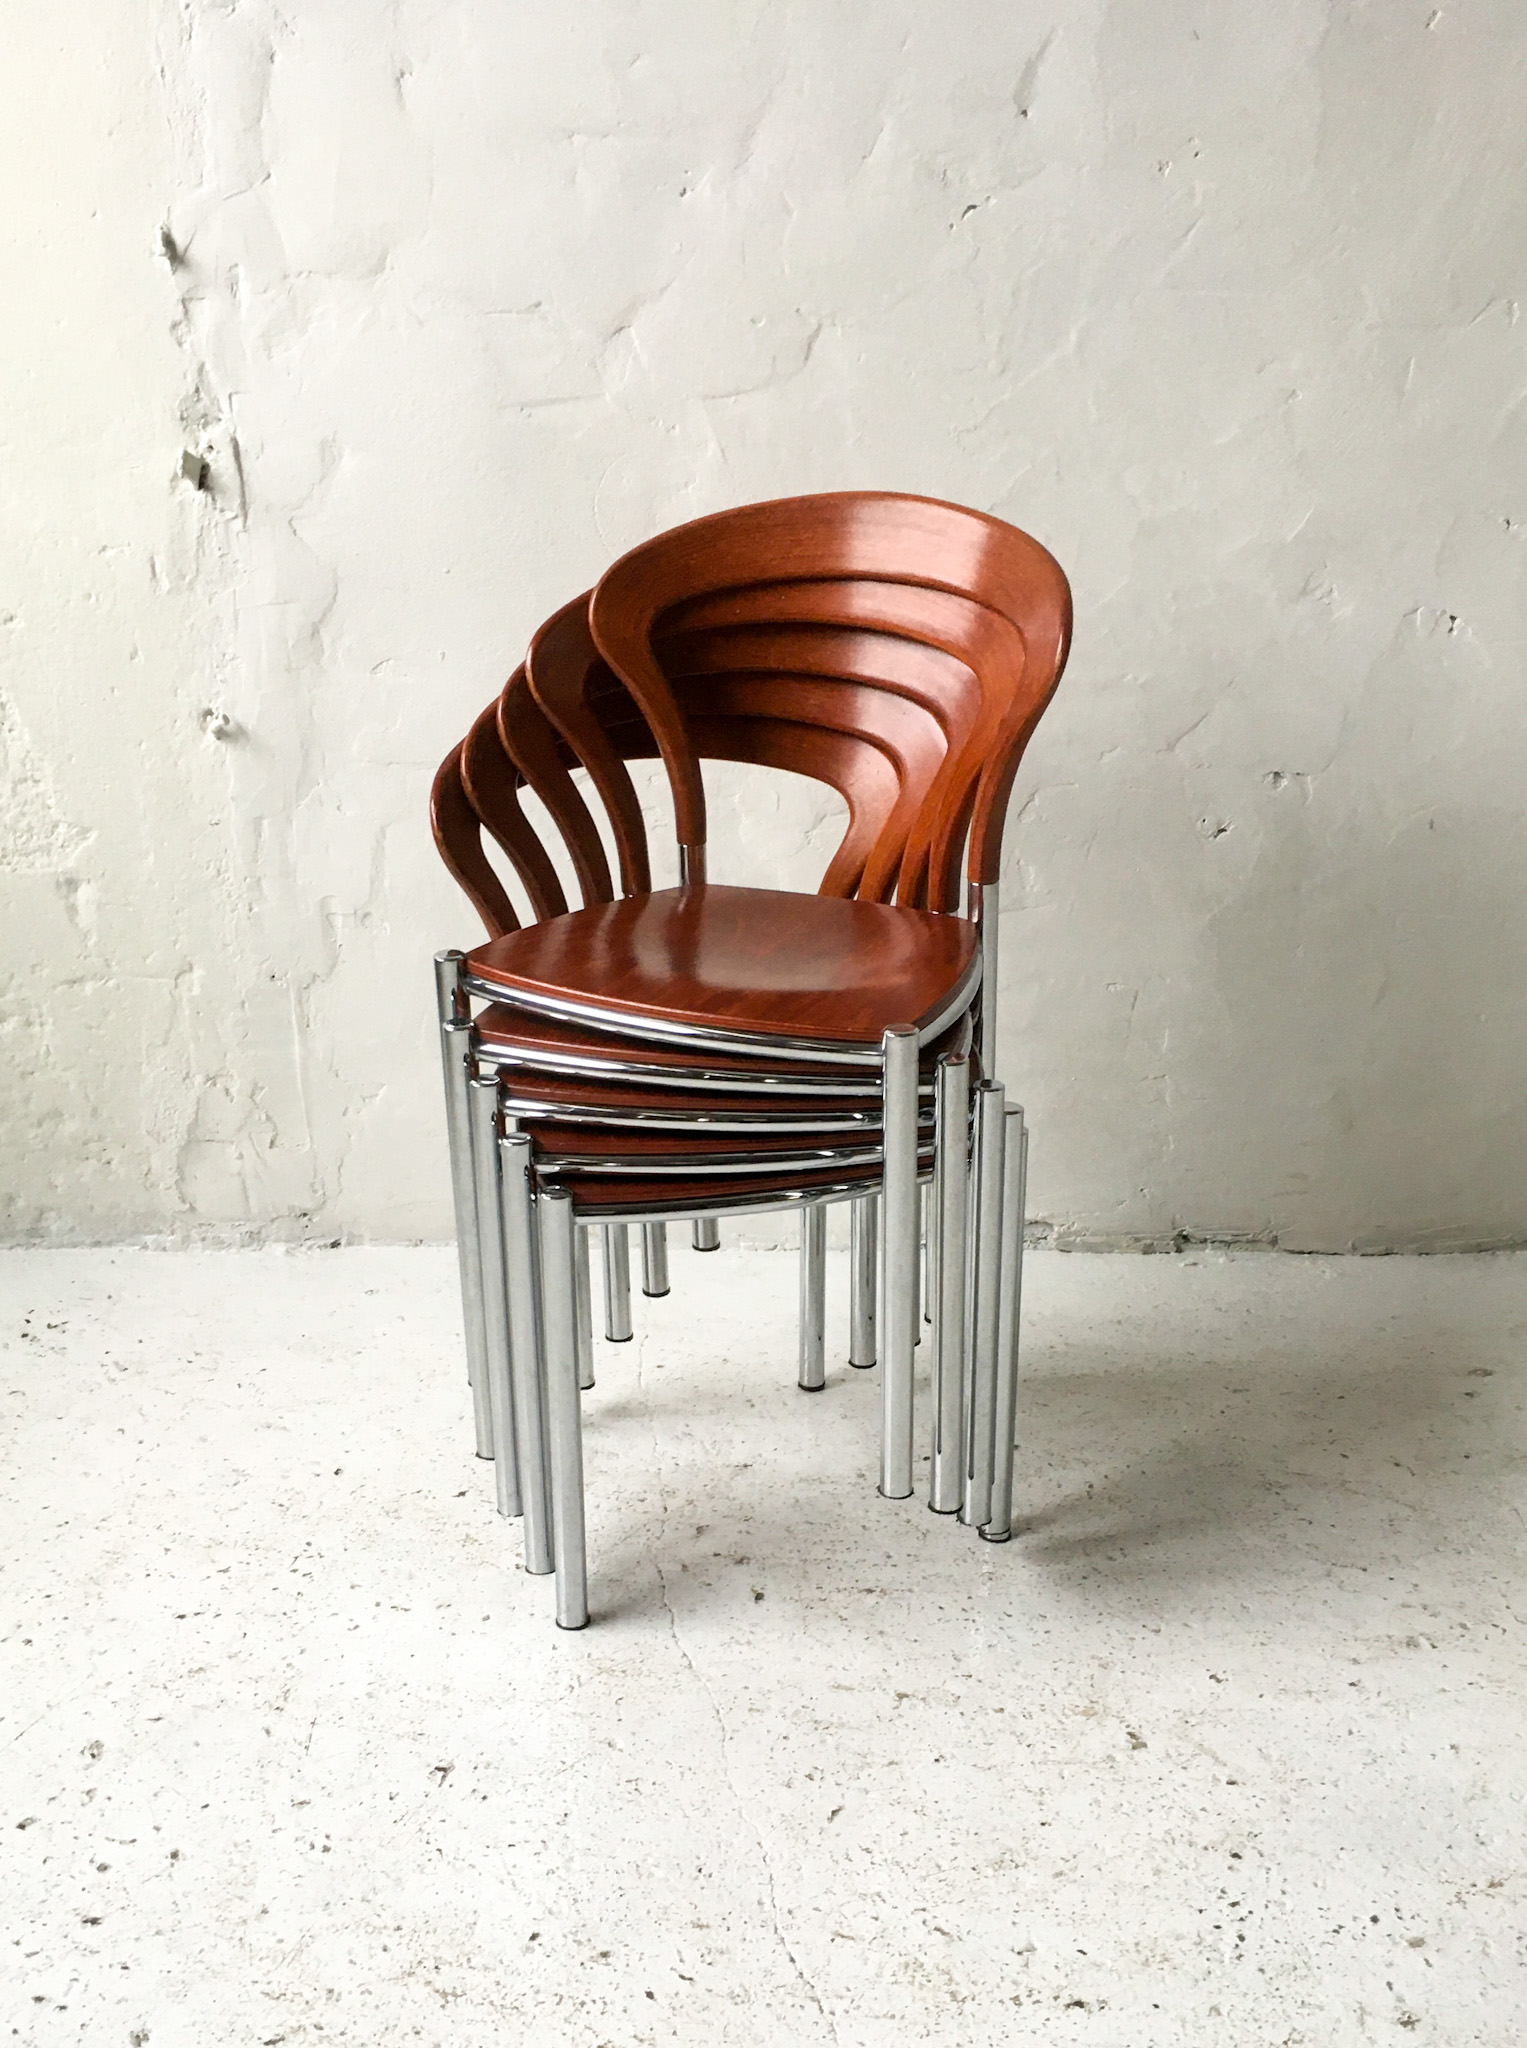 Kusch & Co. krzesła Lotus H. Lohmeyer lata 70 vintage design